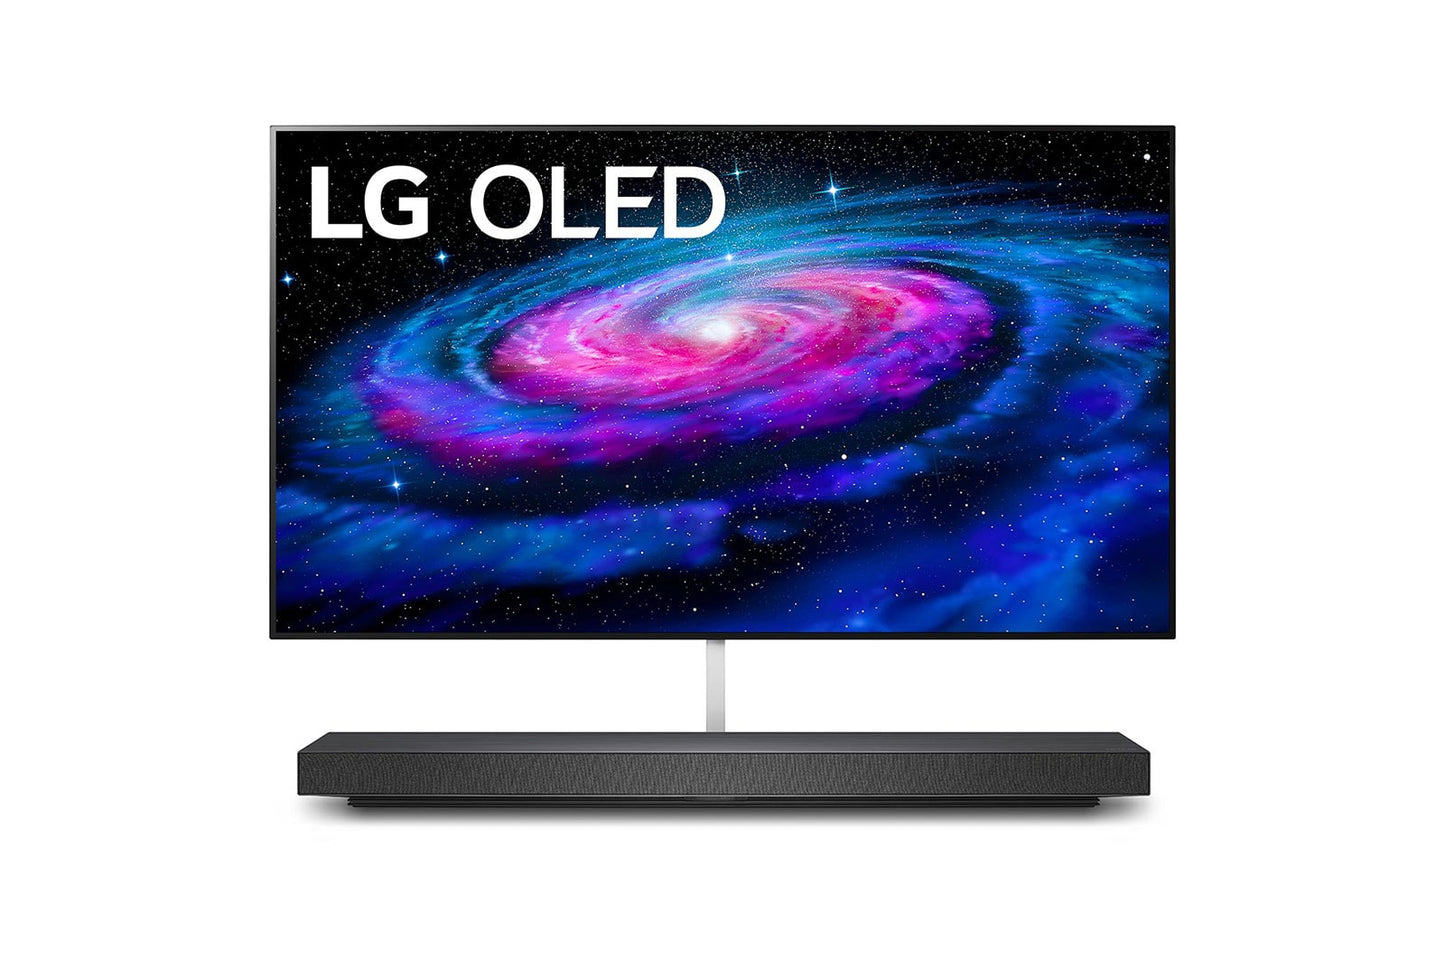 LG 65 inch 4K OLED TV Hands On 